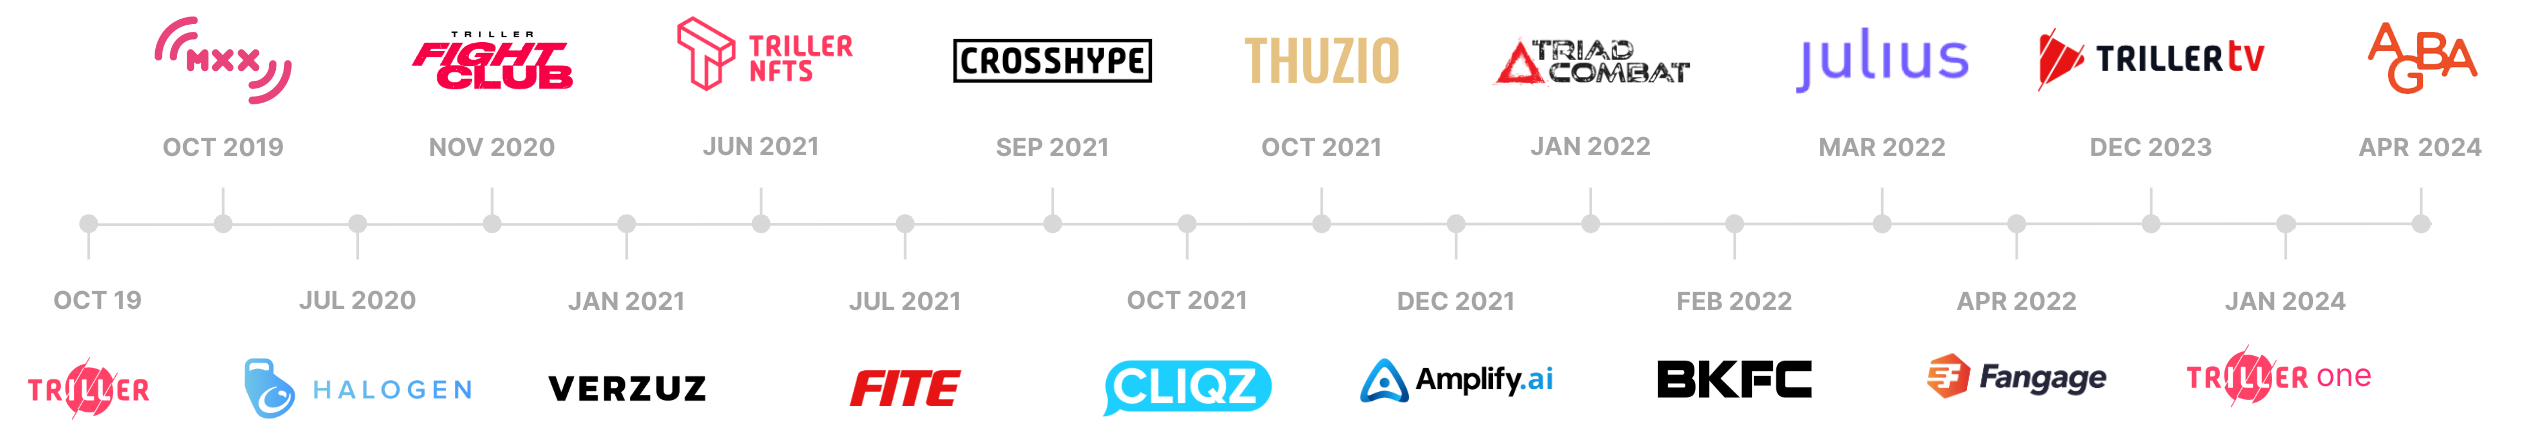 Triller Milestone timeline 2024